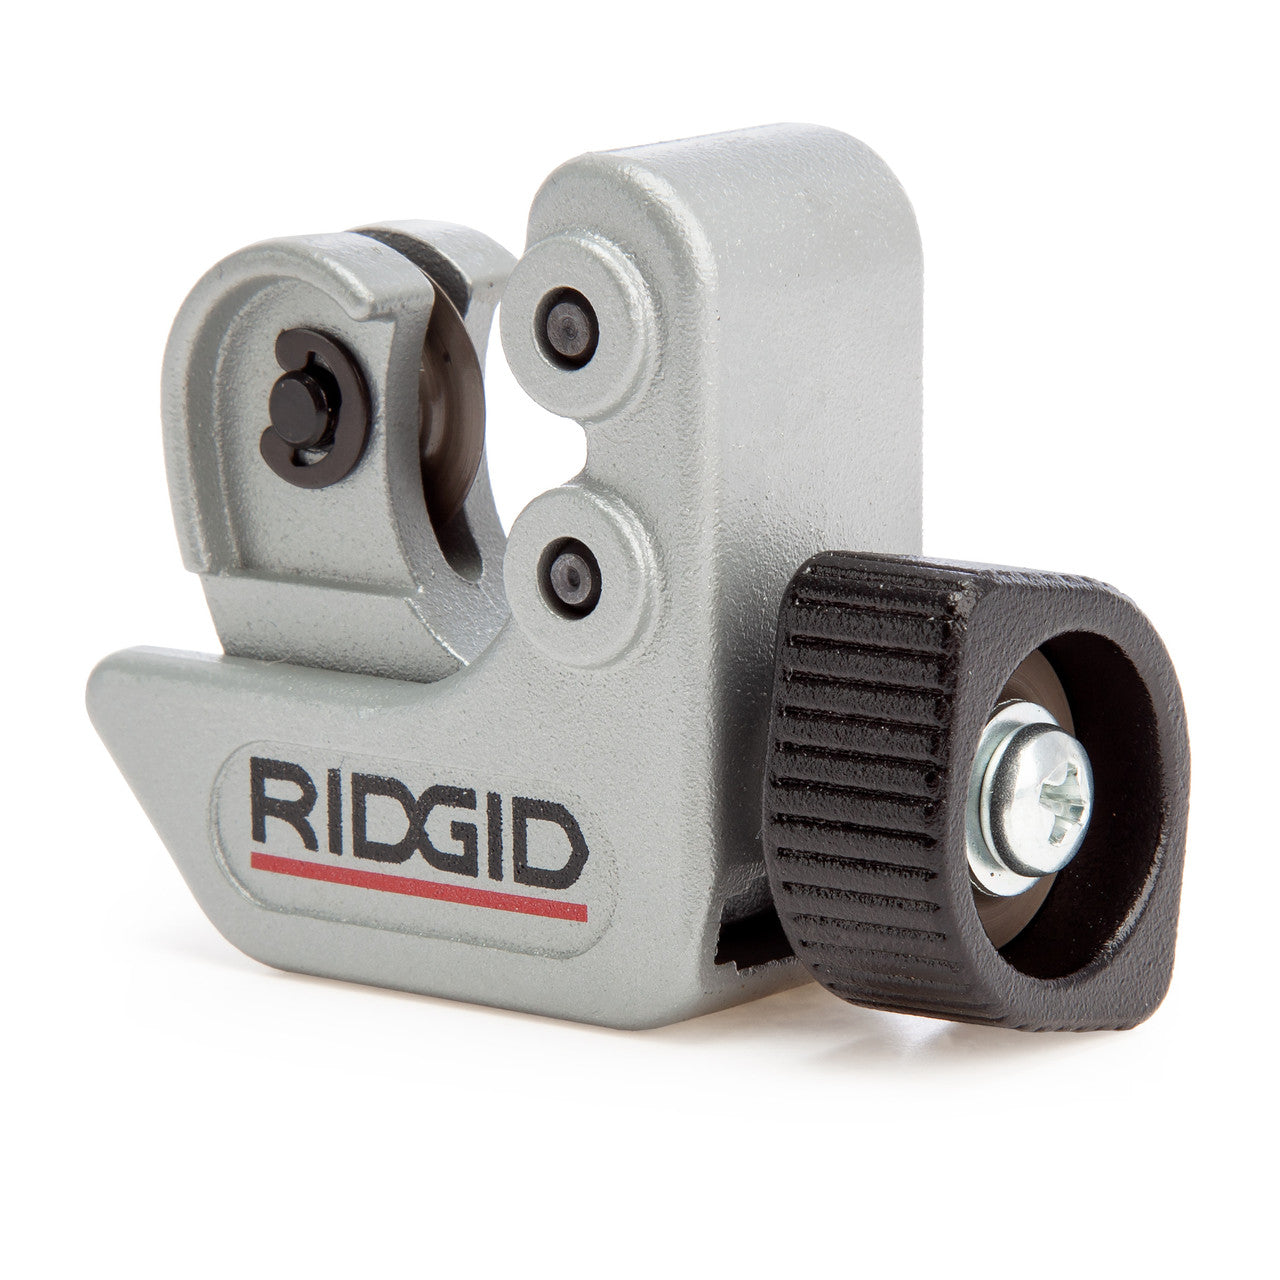 Ridgid 40617 Model 101 Close Quarters Tubing Cutter 6 - 28mm